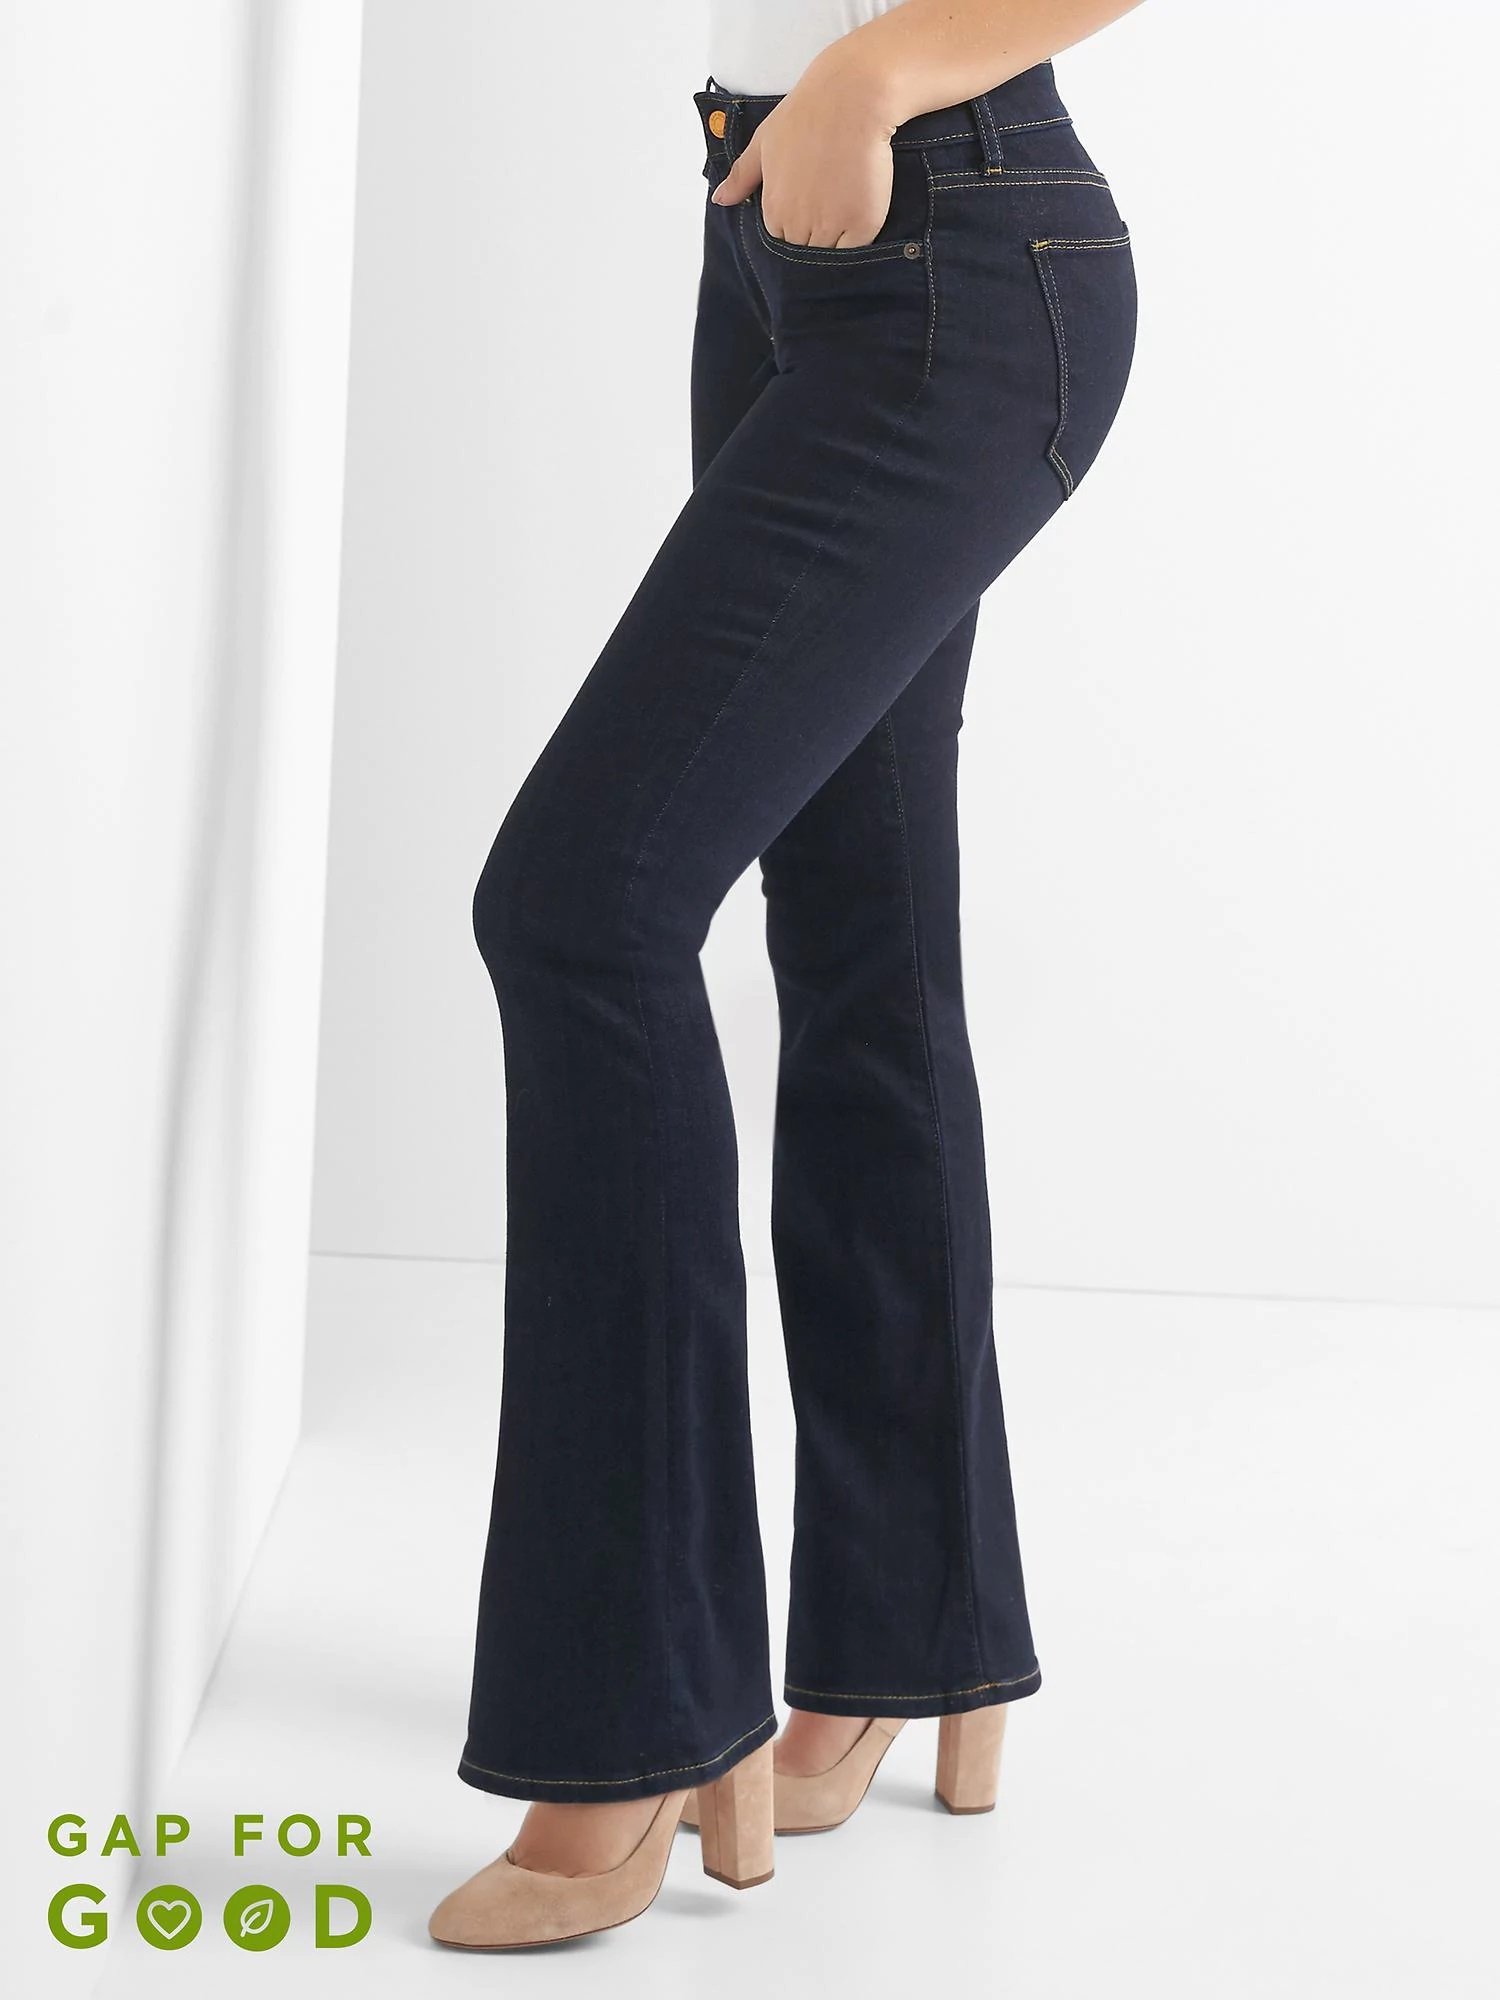 Orta belli curvy perfect boot jean pantolon product image